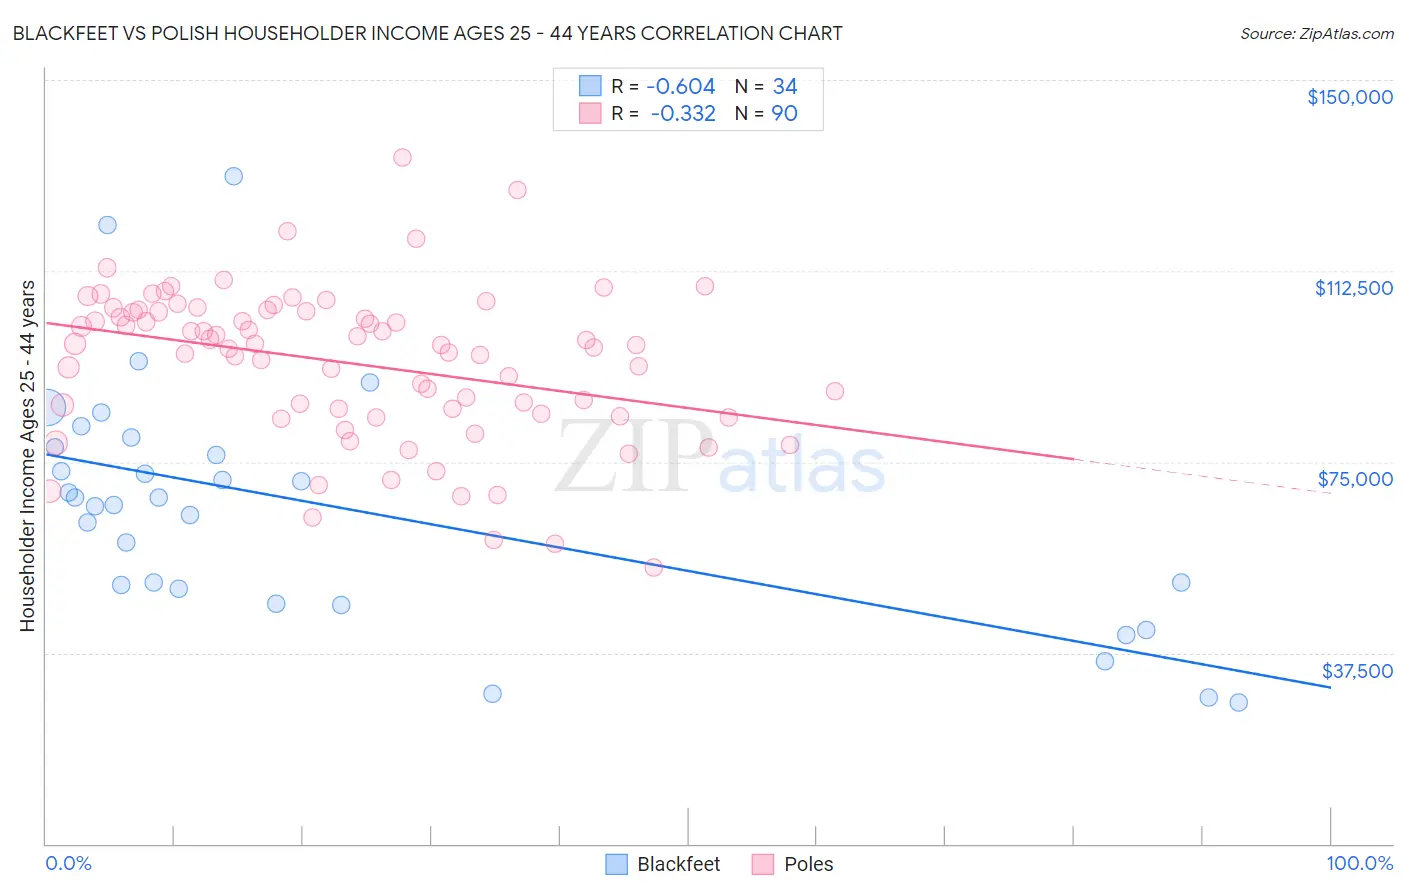 Blackfeet vs Polish Householder Income Ages 25 - 44 years